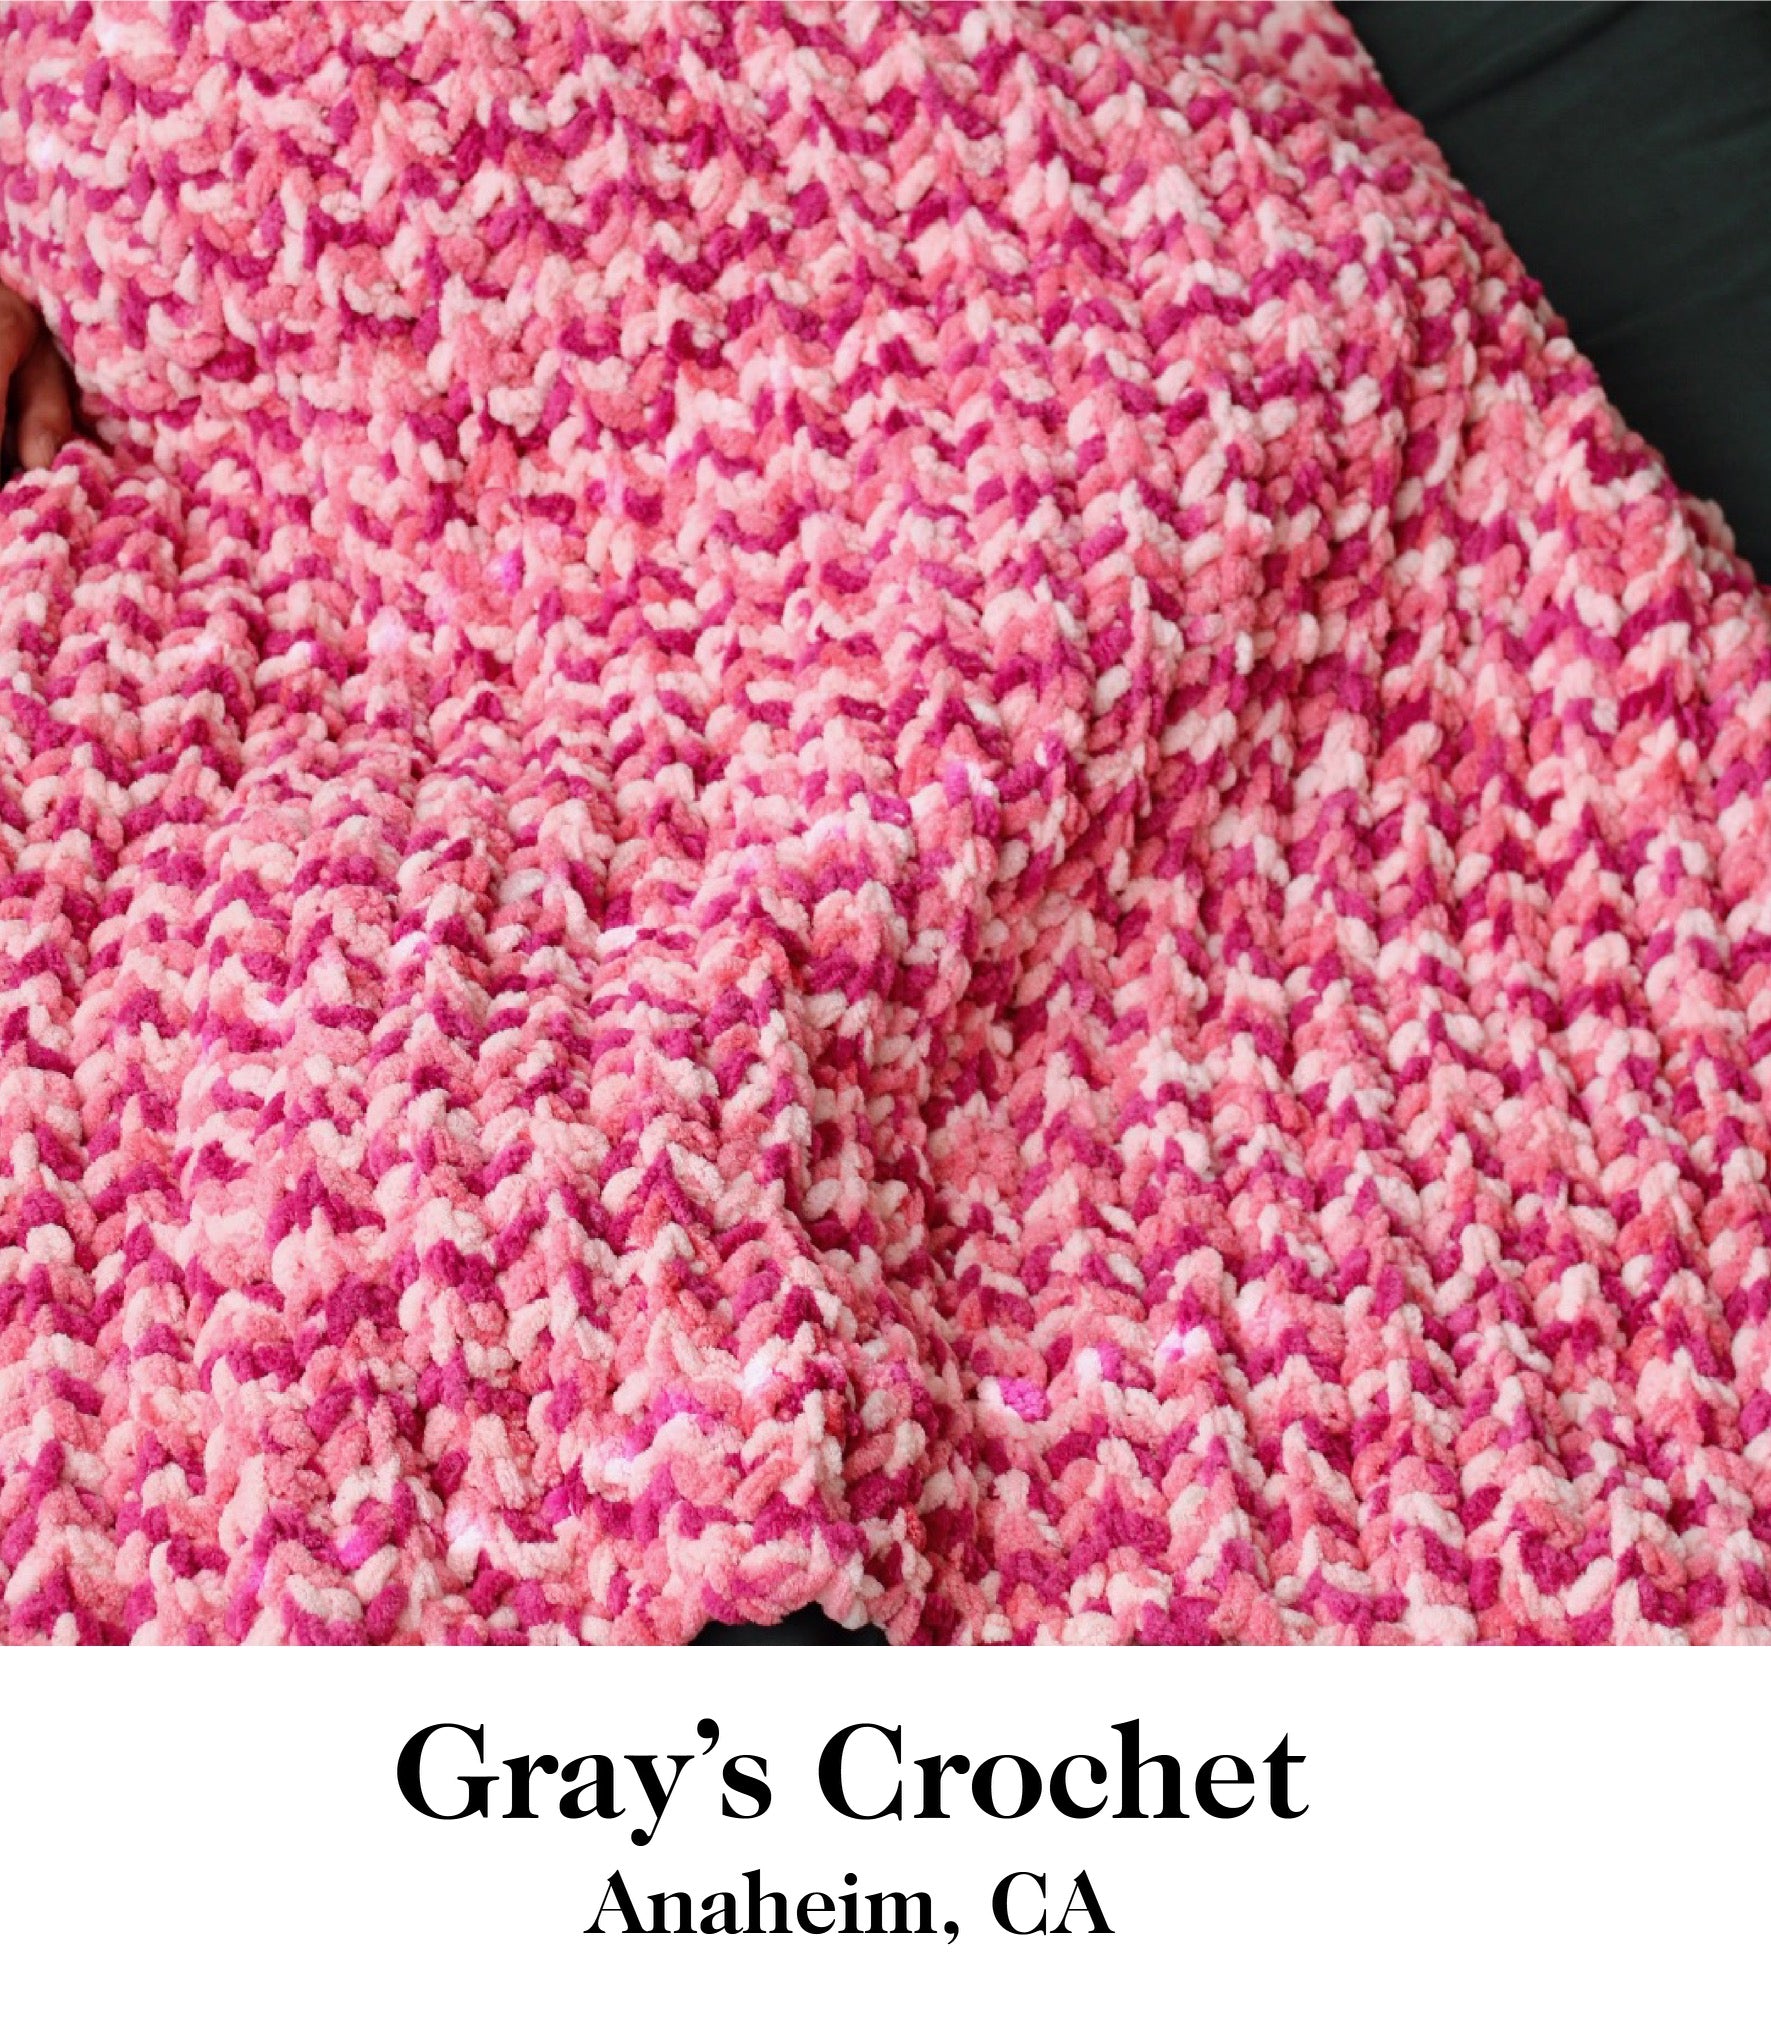 Gray's Crochet